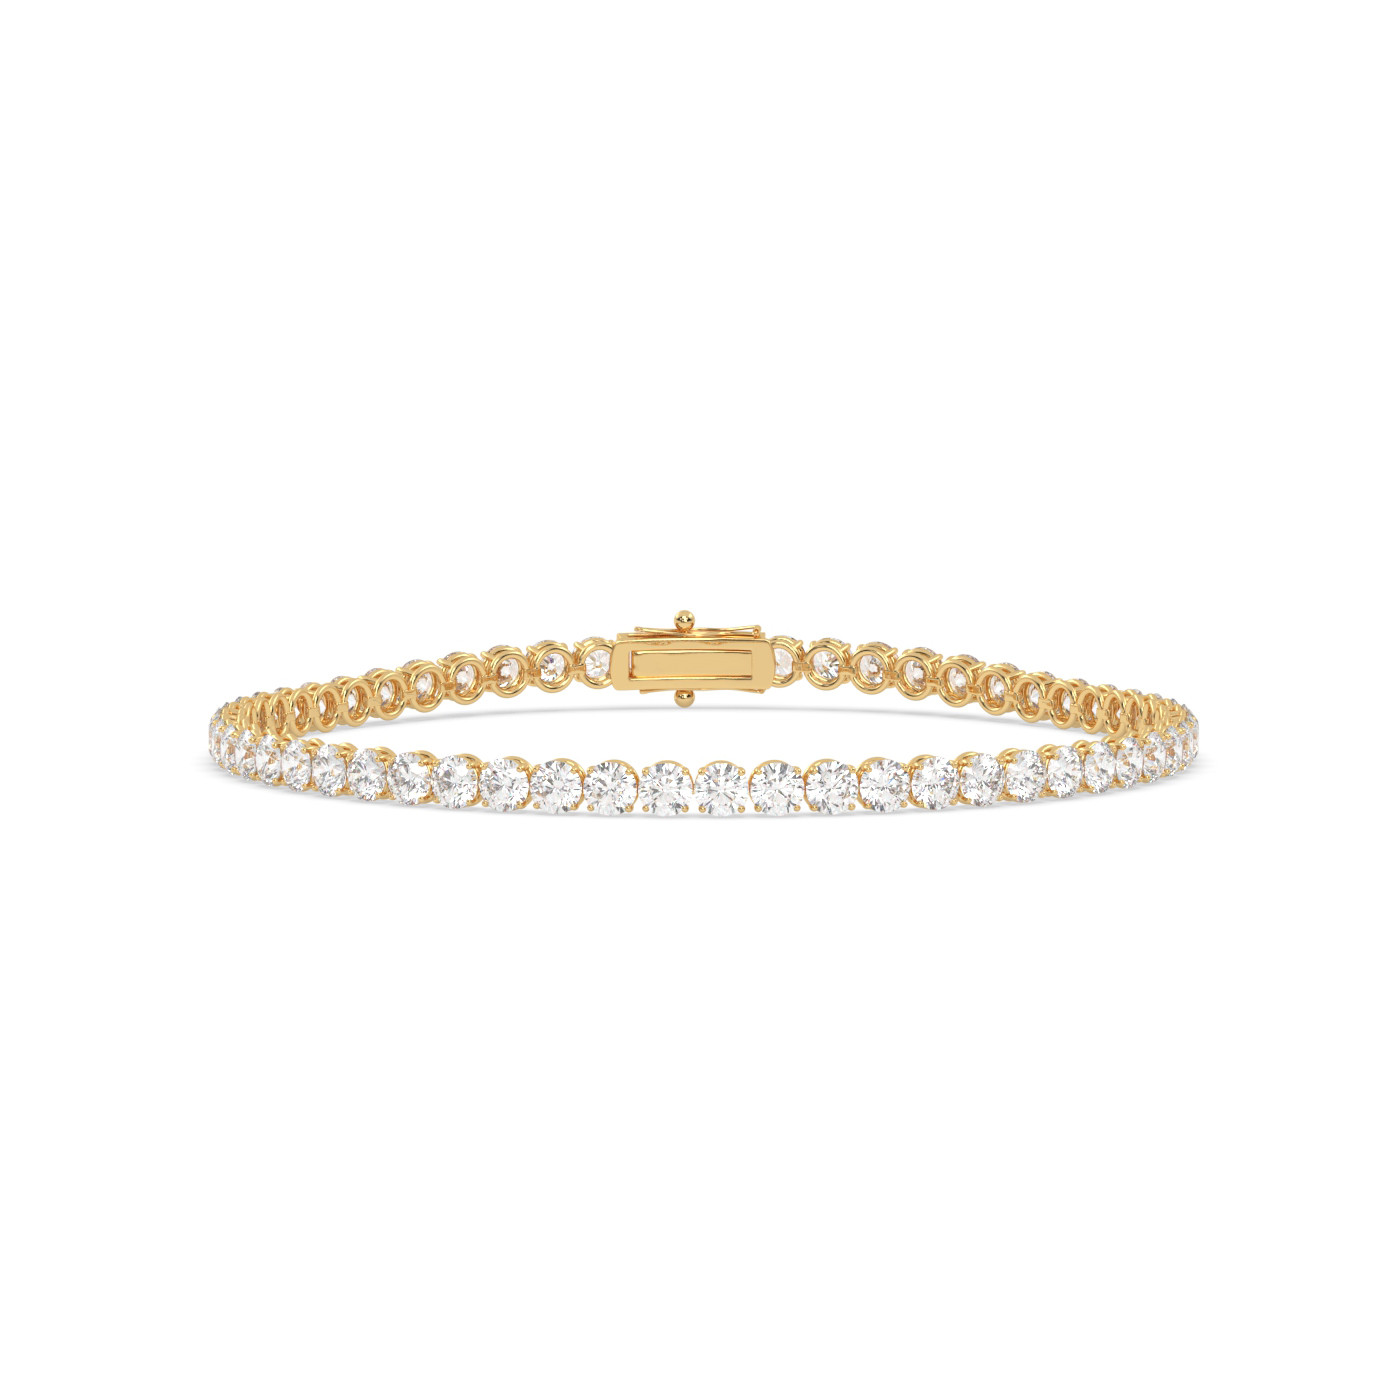 18k yellow gold  3.0 carat round diamond tennis bracelet with traditional lock sytem